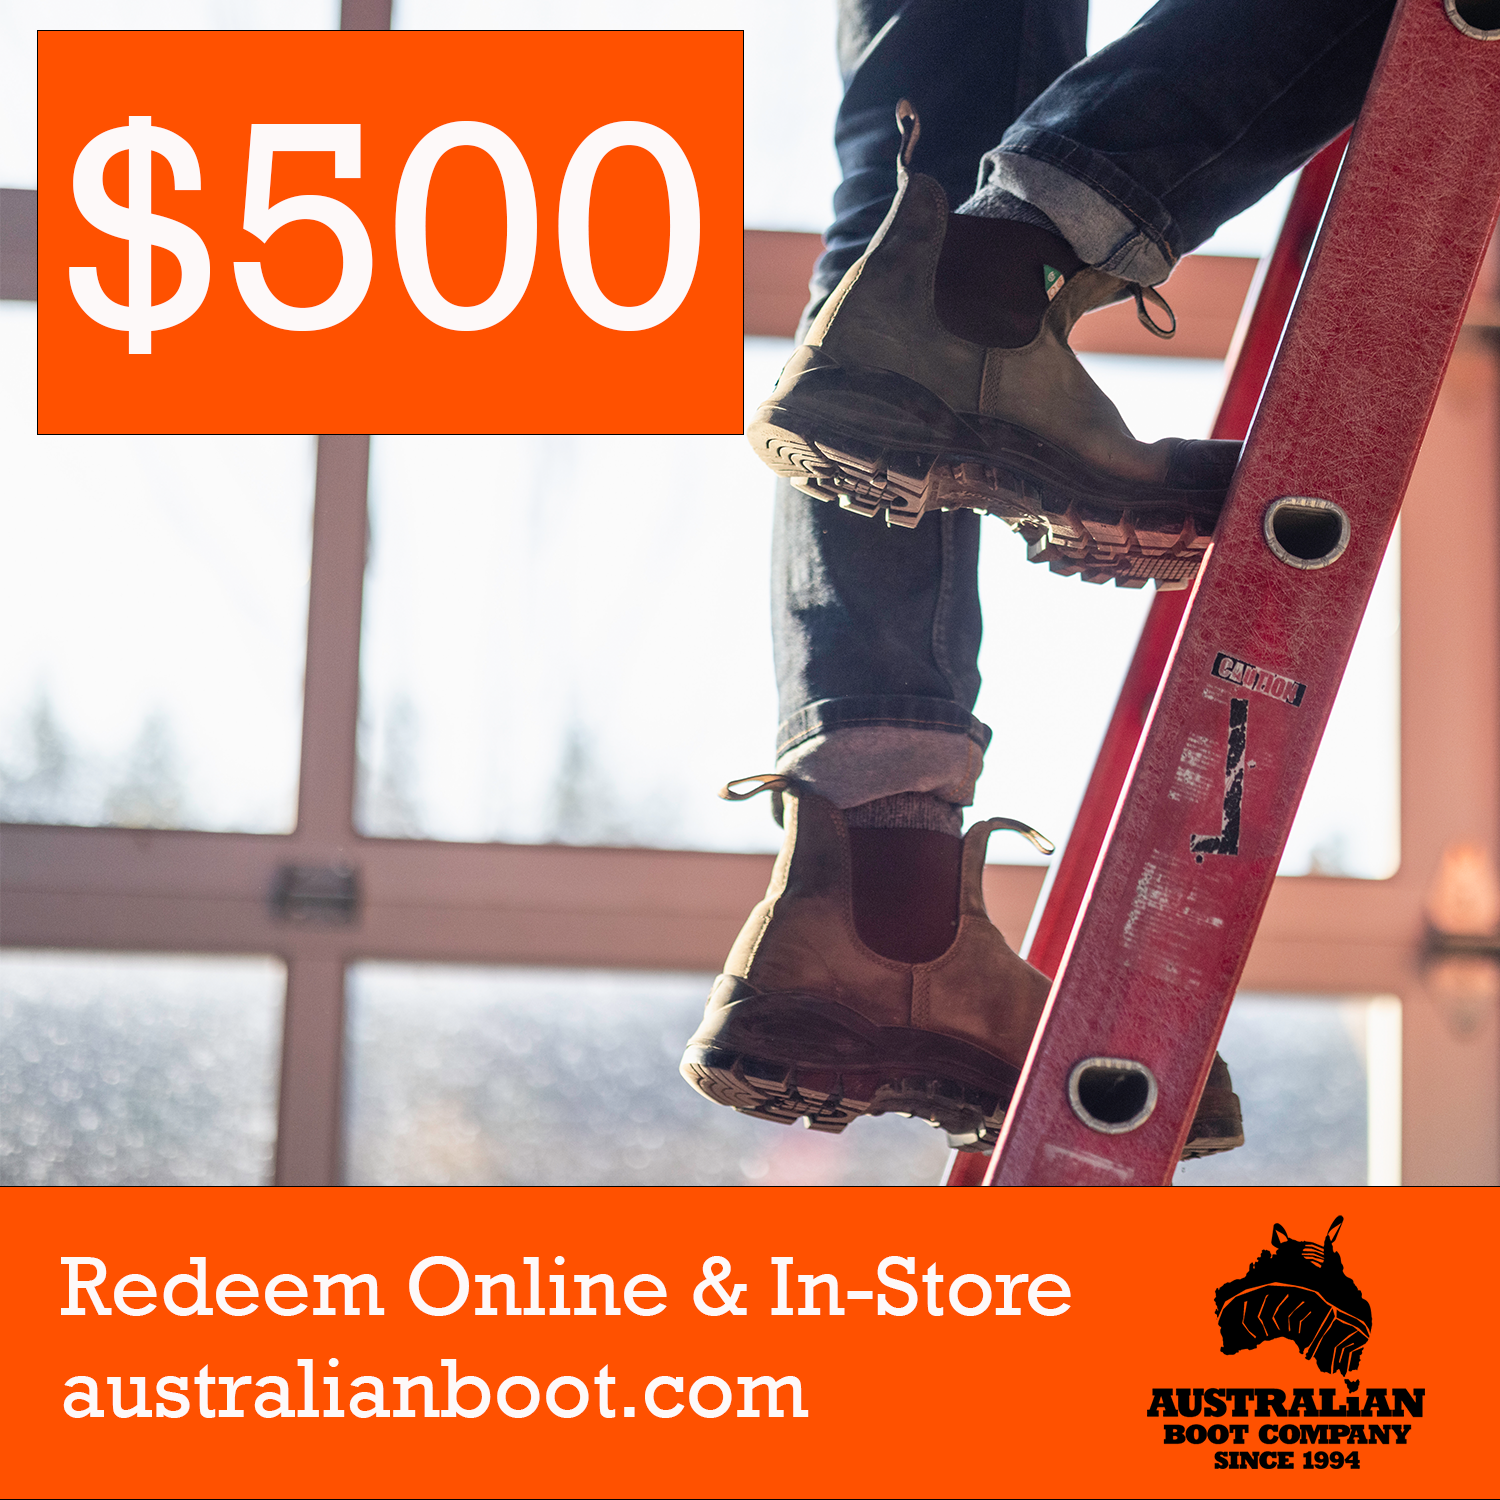 Australian Boot Company $500 Gift Card